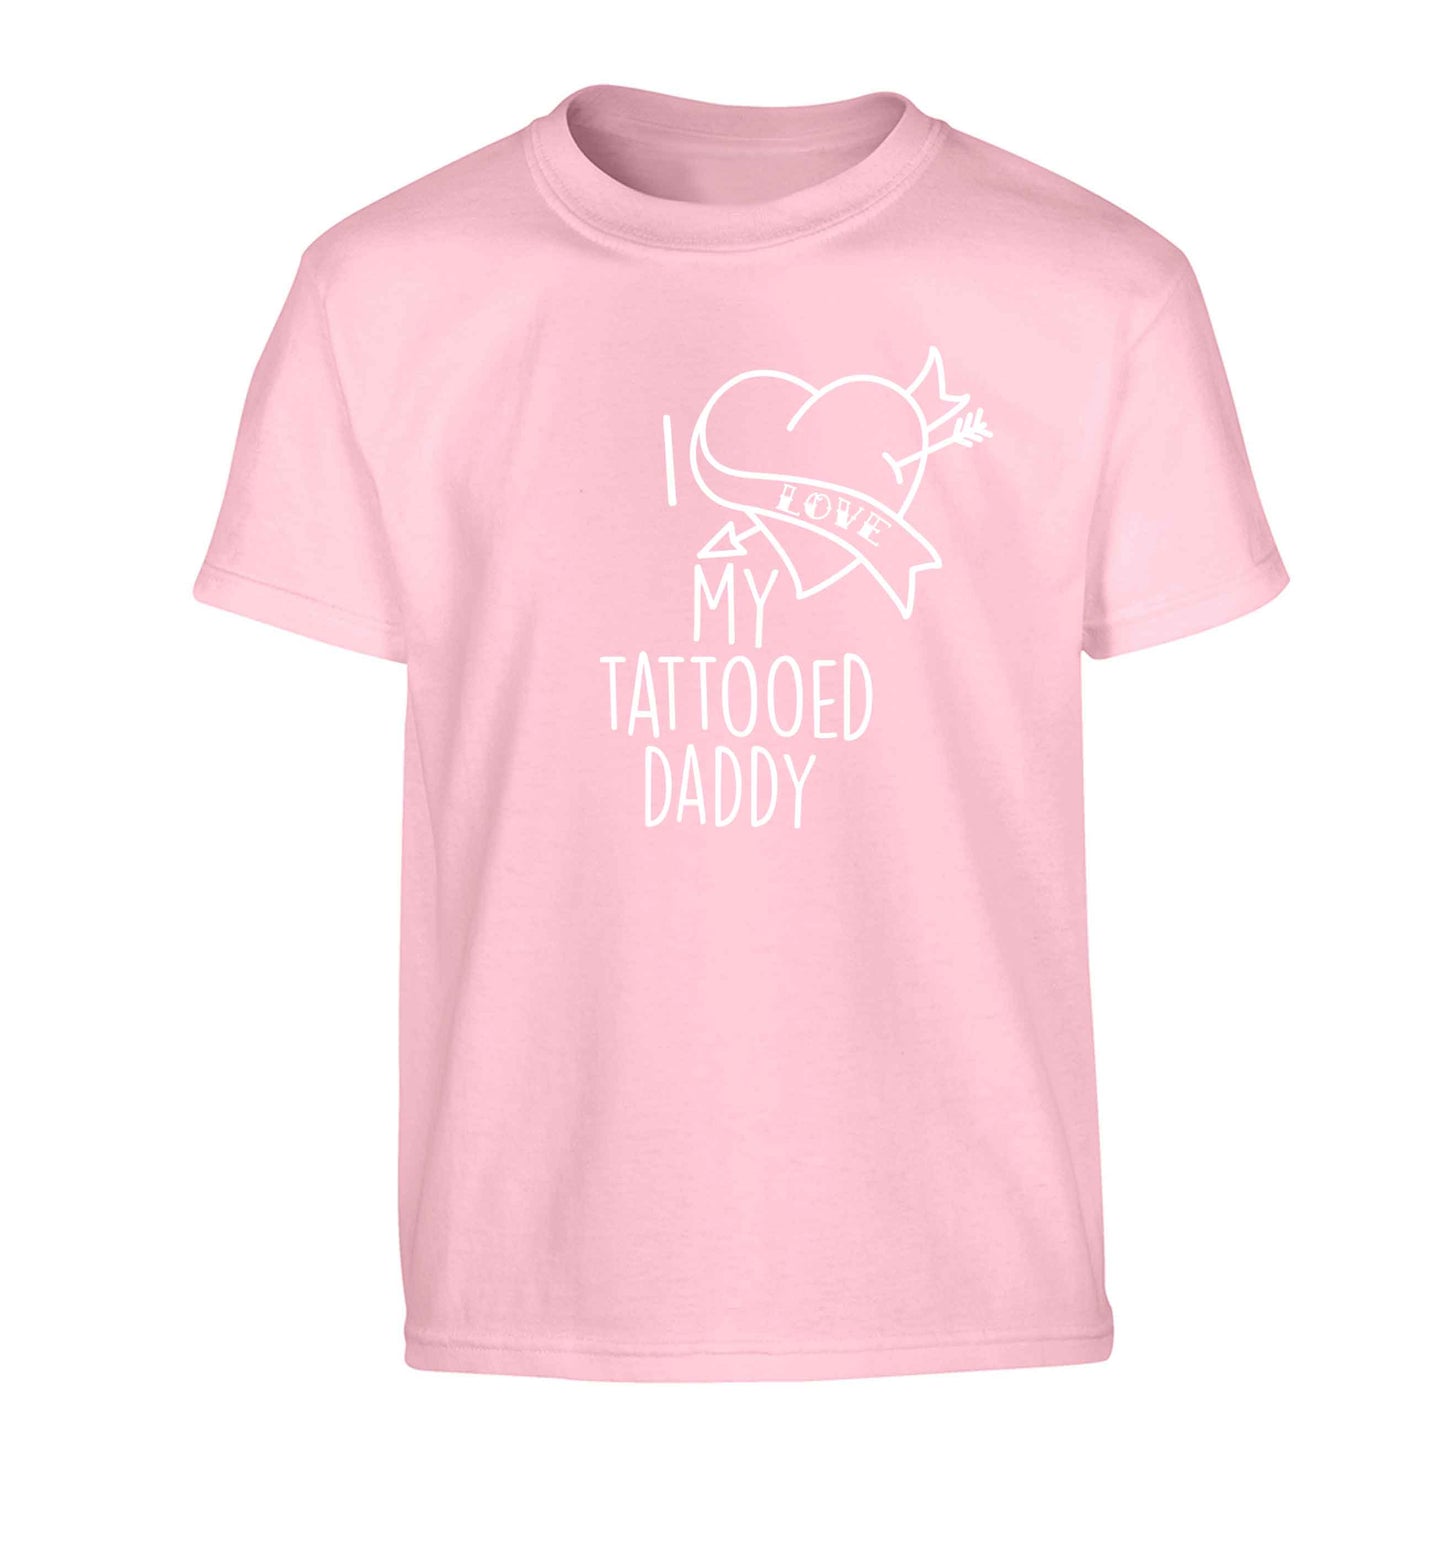 I love my tattooed daddy Children's light pink Tshirt 12-13 Years